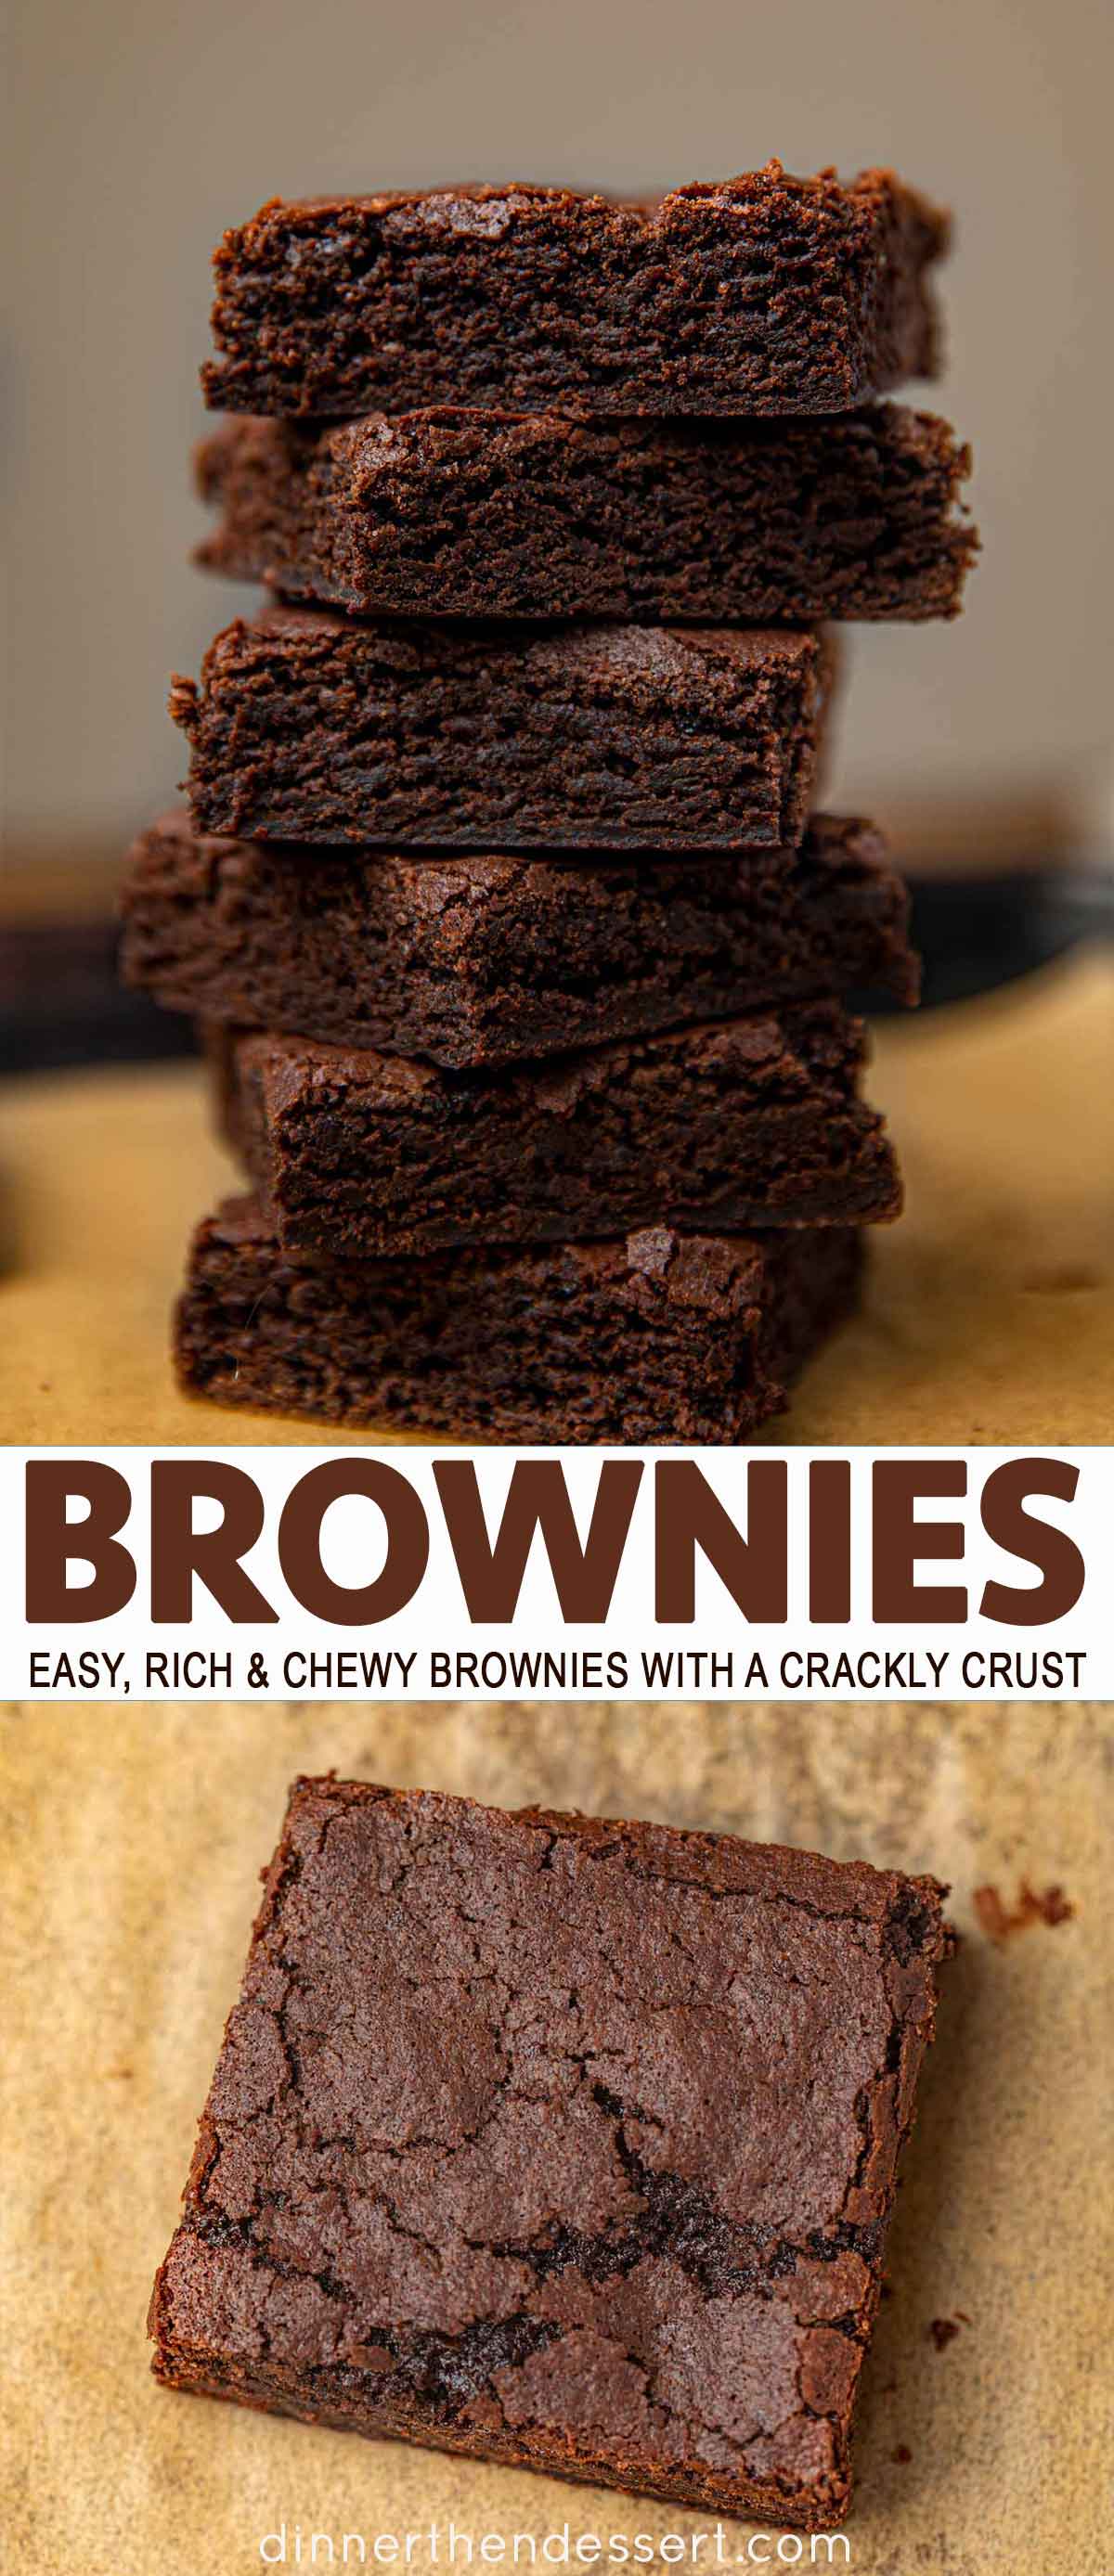 https://dinnerthendessert.com/wp-content/uploads/2019/09/Brownies-L.jpg